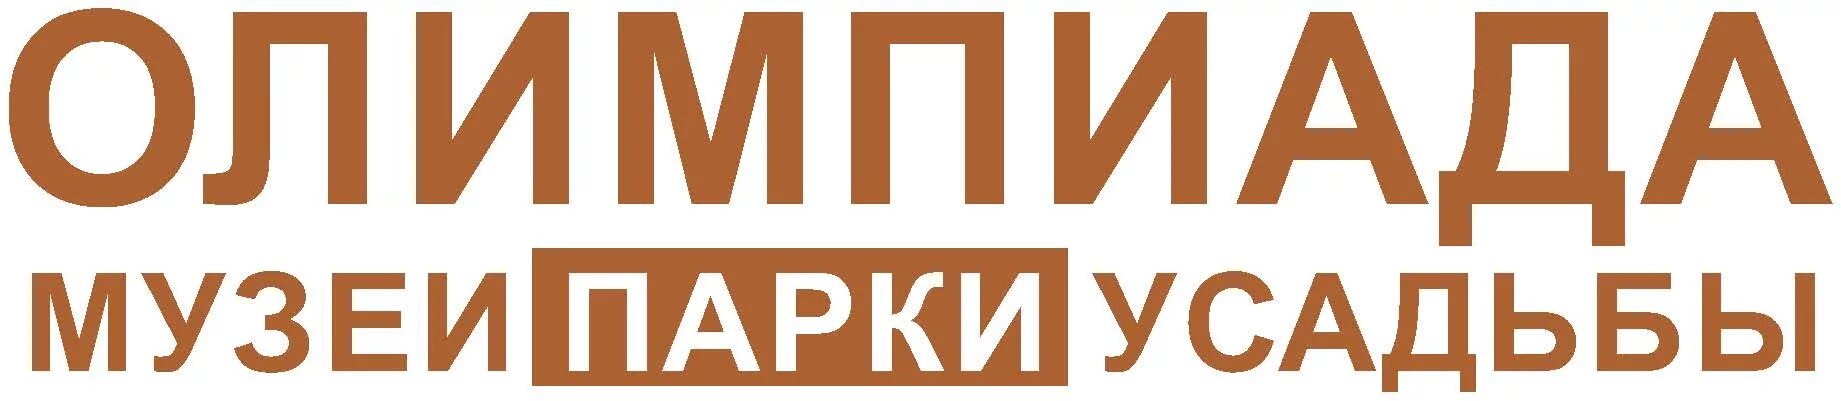 Логотип олимпиады парки музеи.